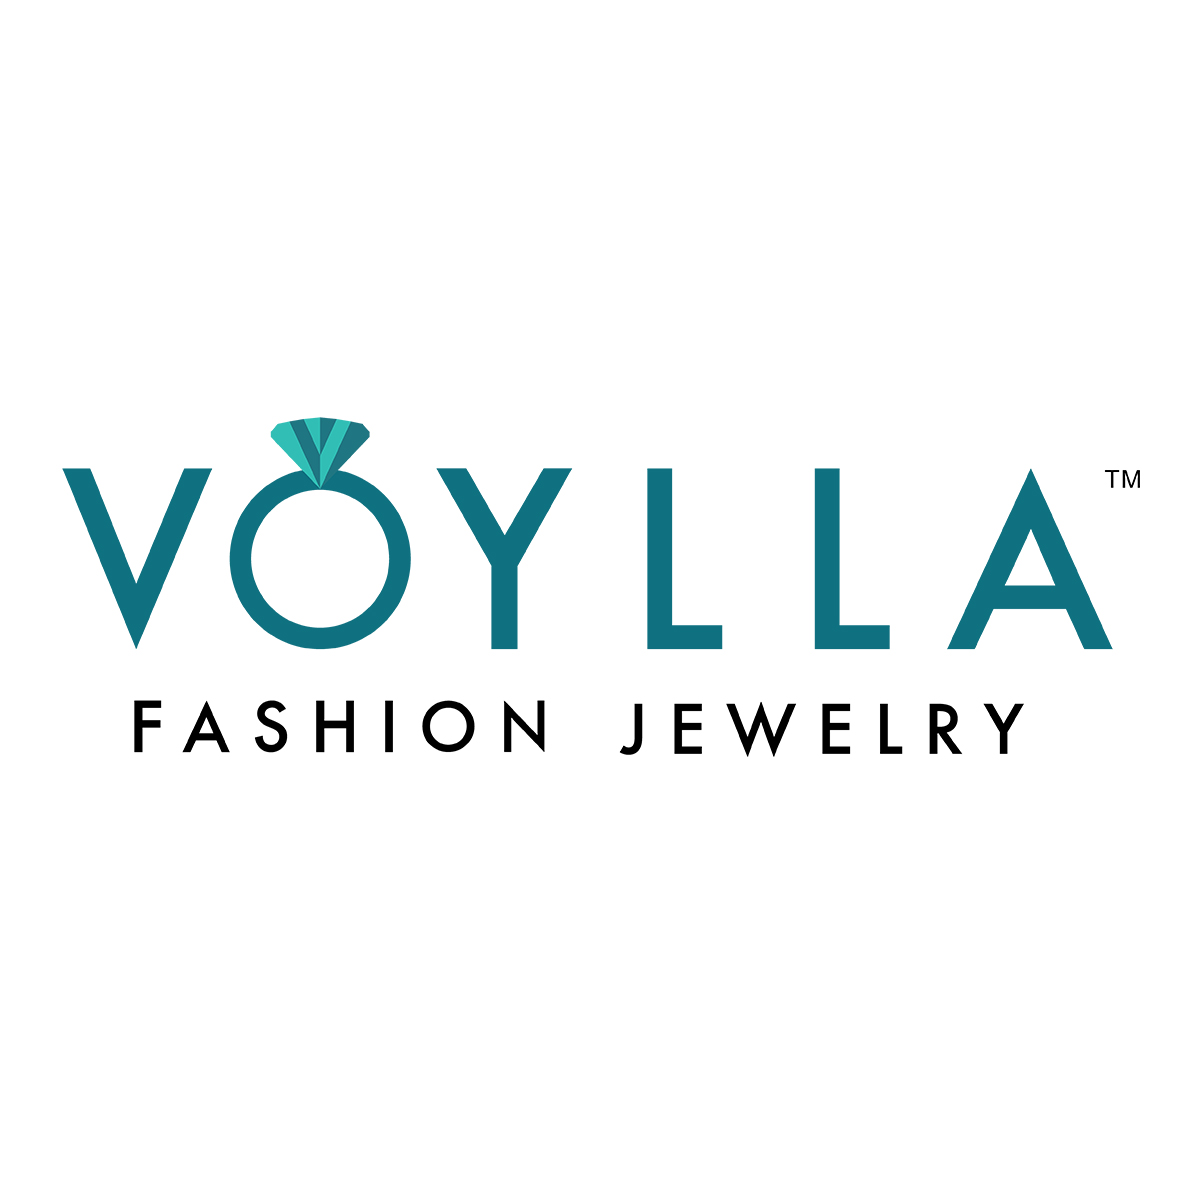 VOYLLA, Next Galleria Malls